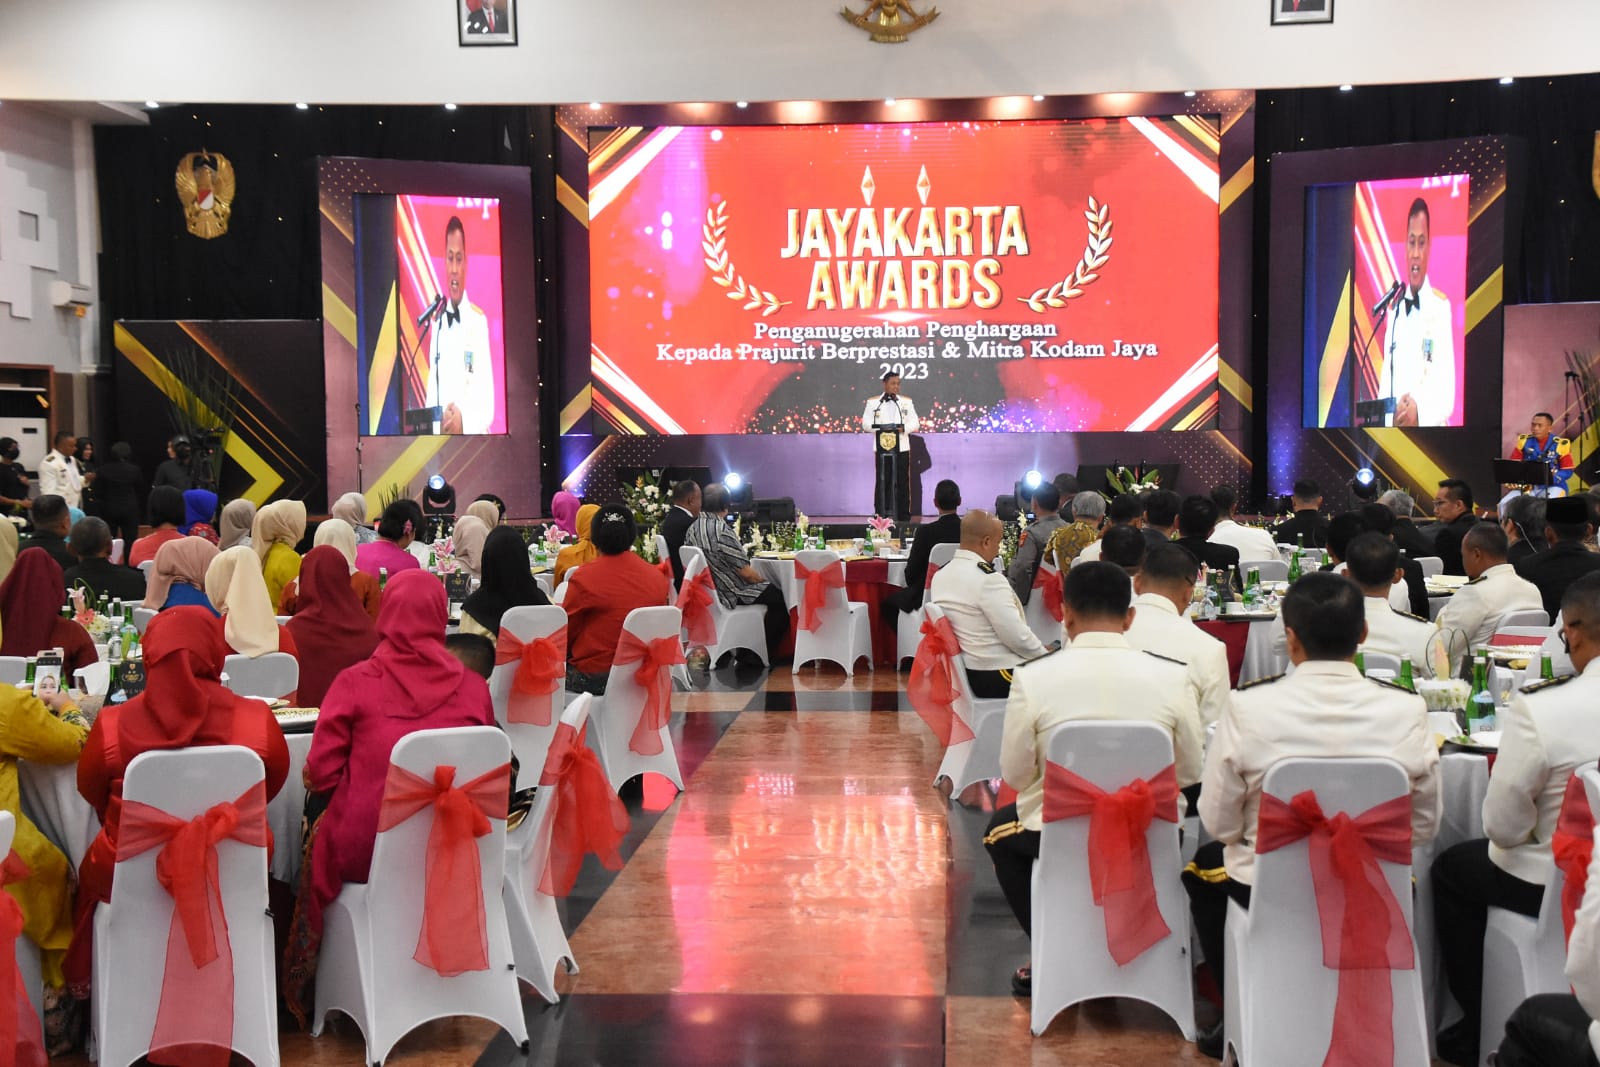 Prajurit Berprestasi dan Mitra Kodam Jaya Raih Jayakarta Awards